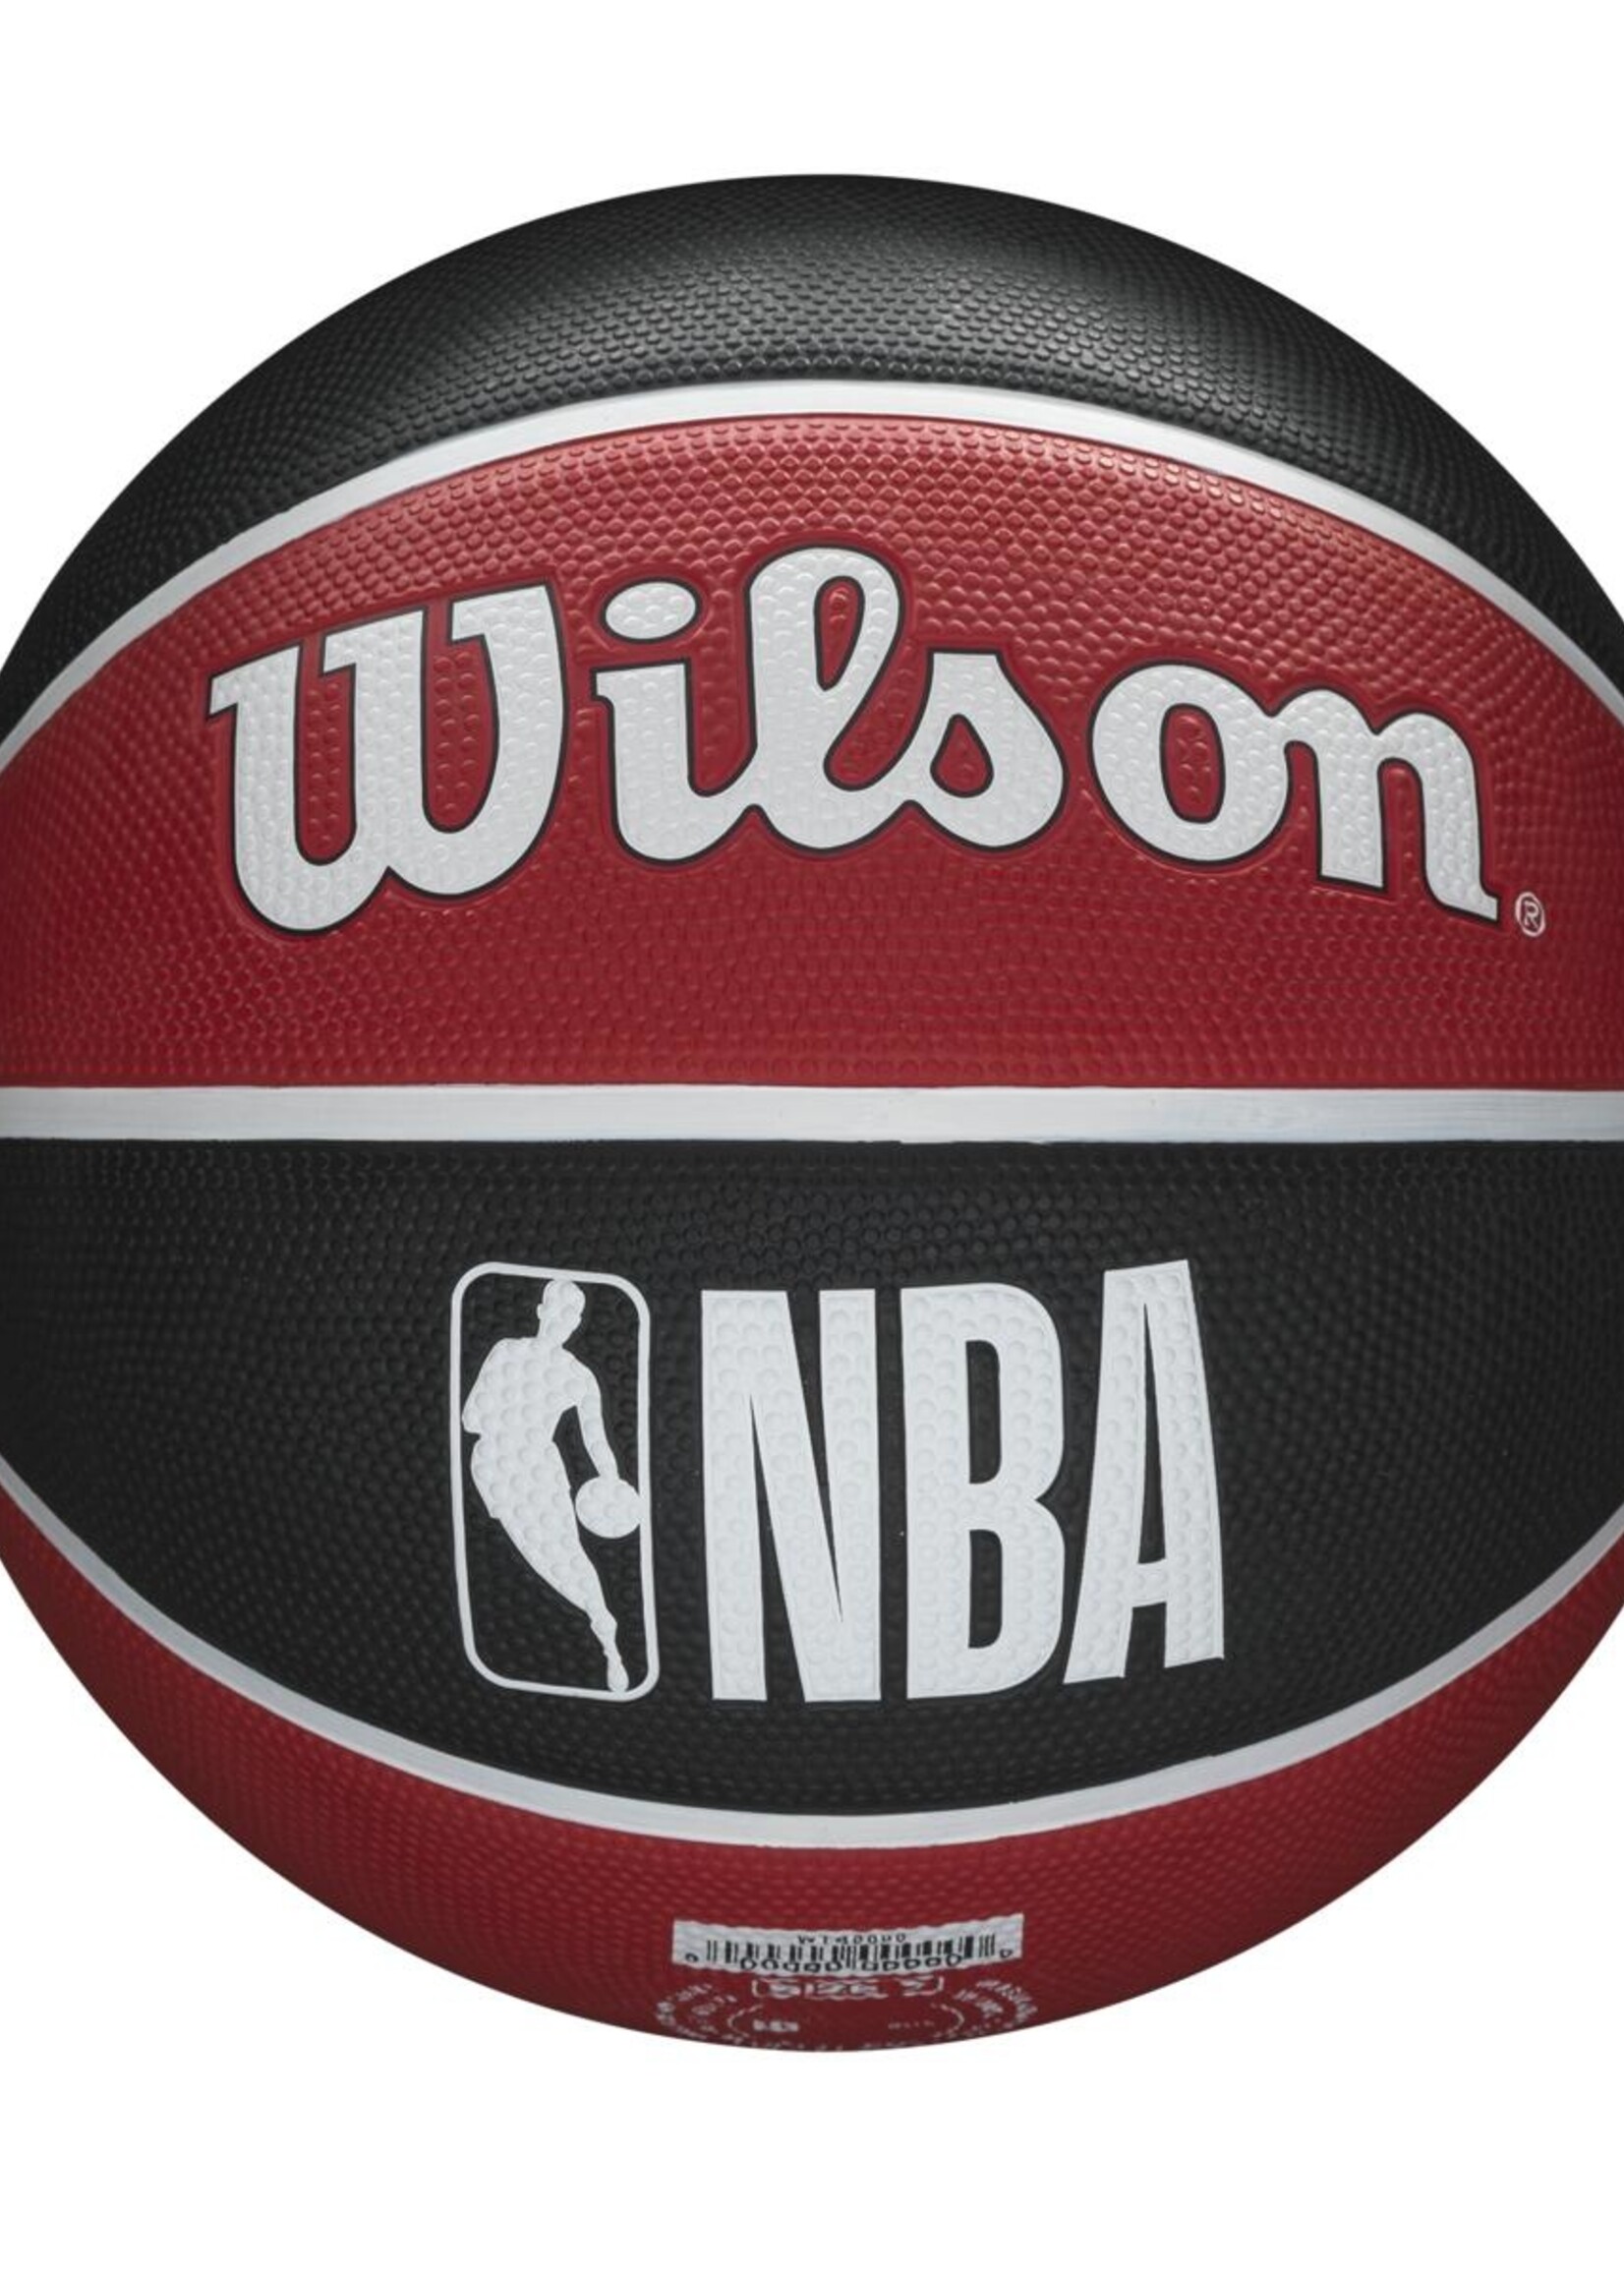 Wilson Wilson NBA CHICAGO BULLS Tribute basketbal (7)